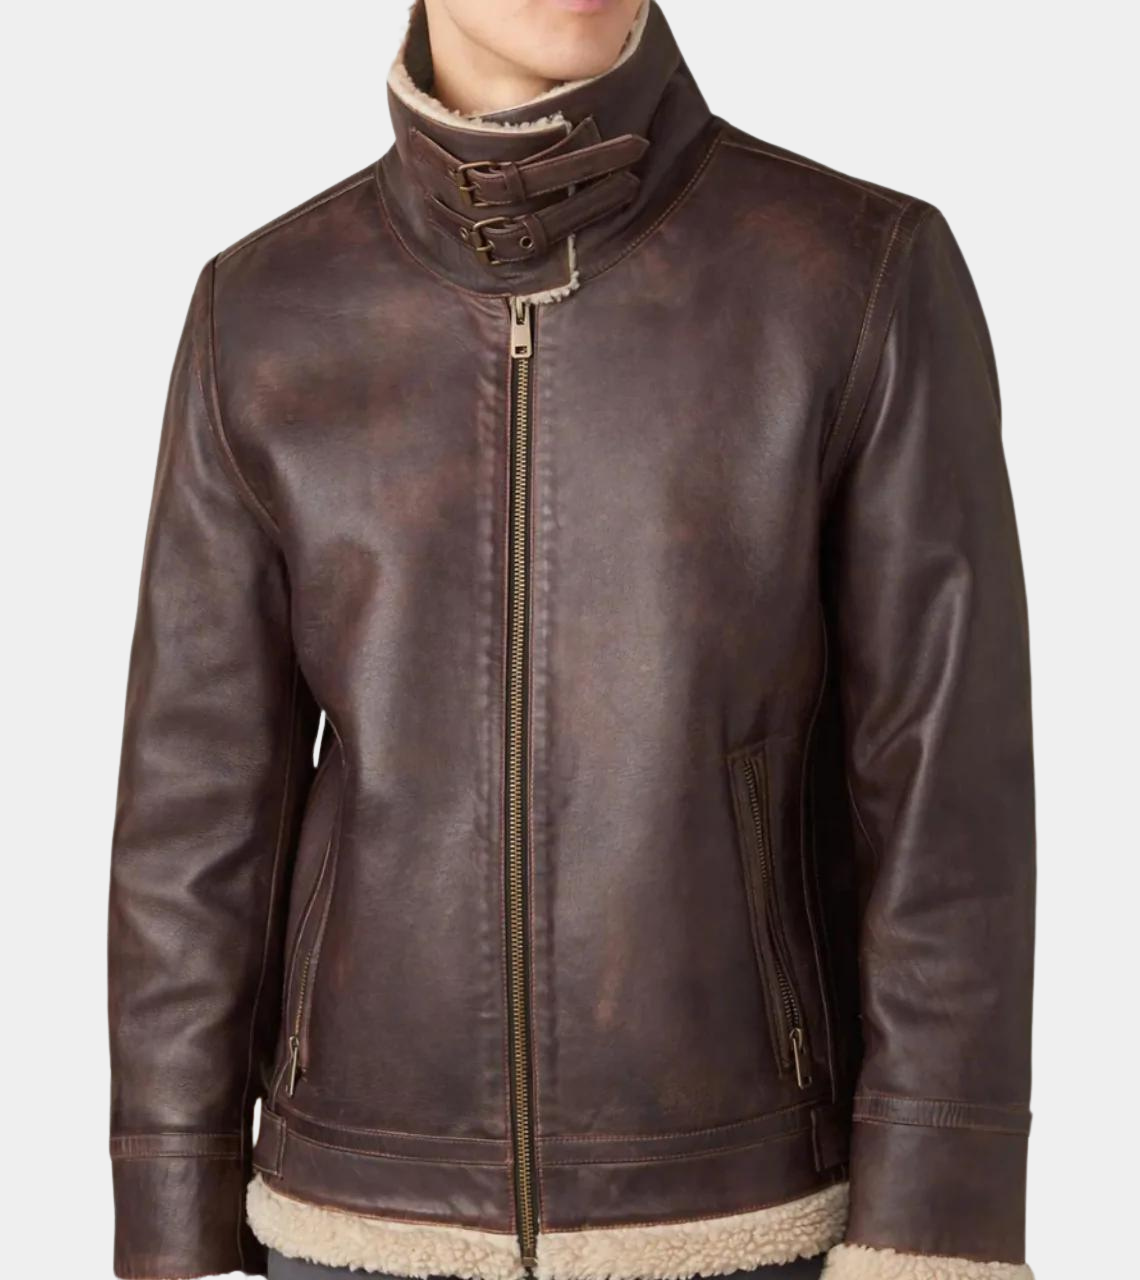  Mathew Men's Shearling Leather Jacket  Zippered